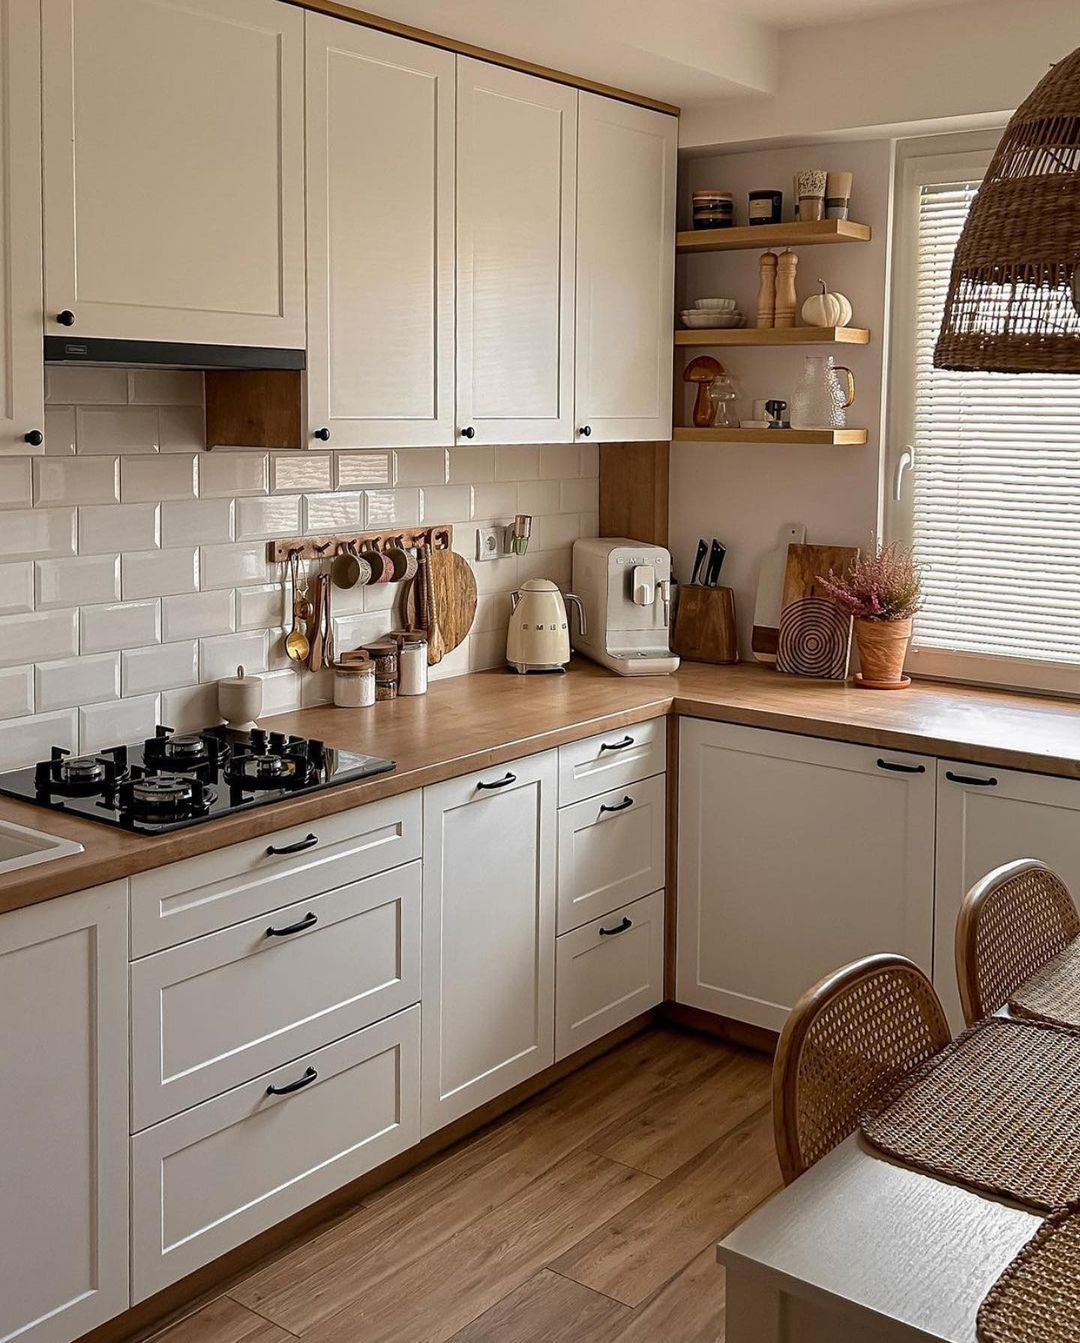 8 kitchen inspirations kitchen design ideas decor